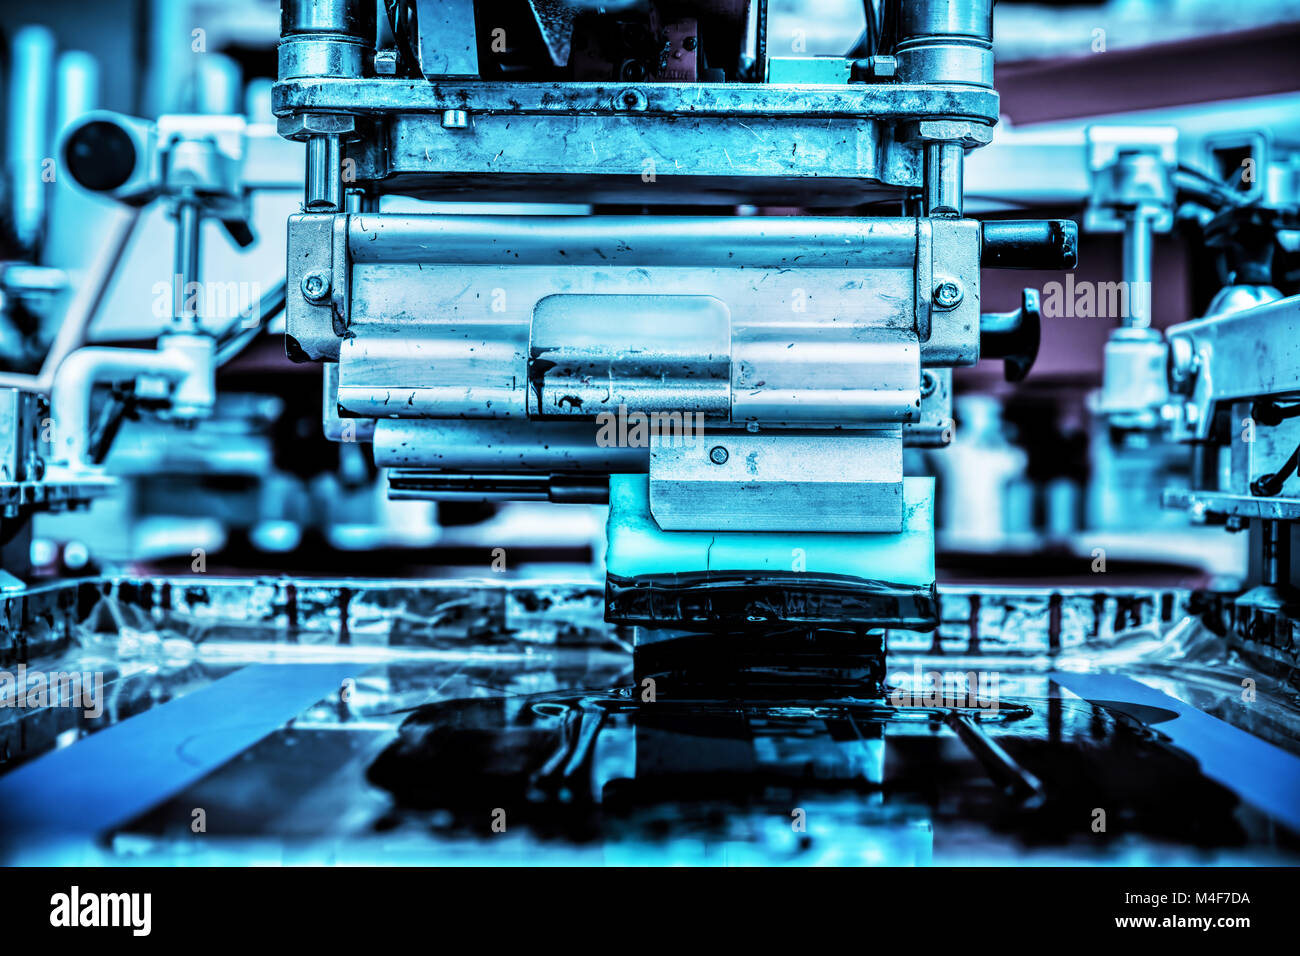 Industrial metal printing machinery. Stock Photo